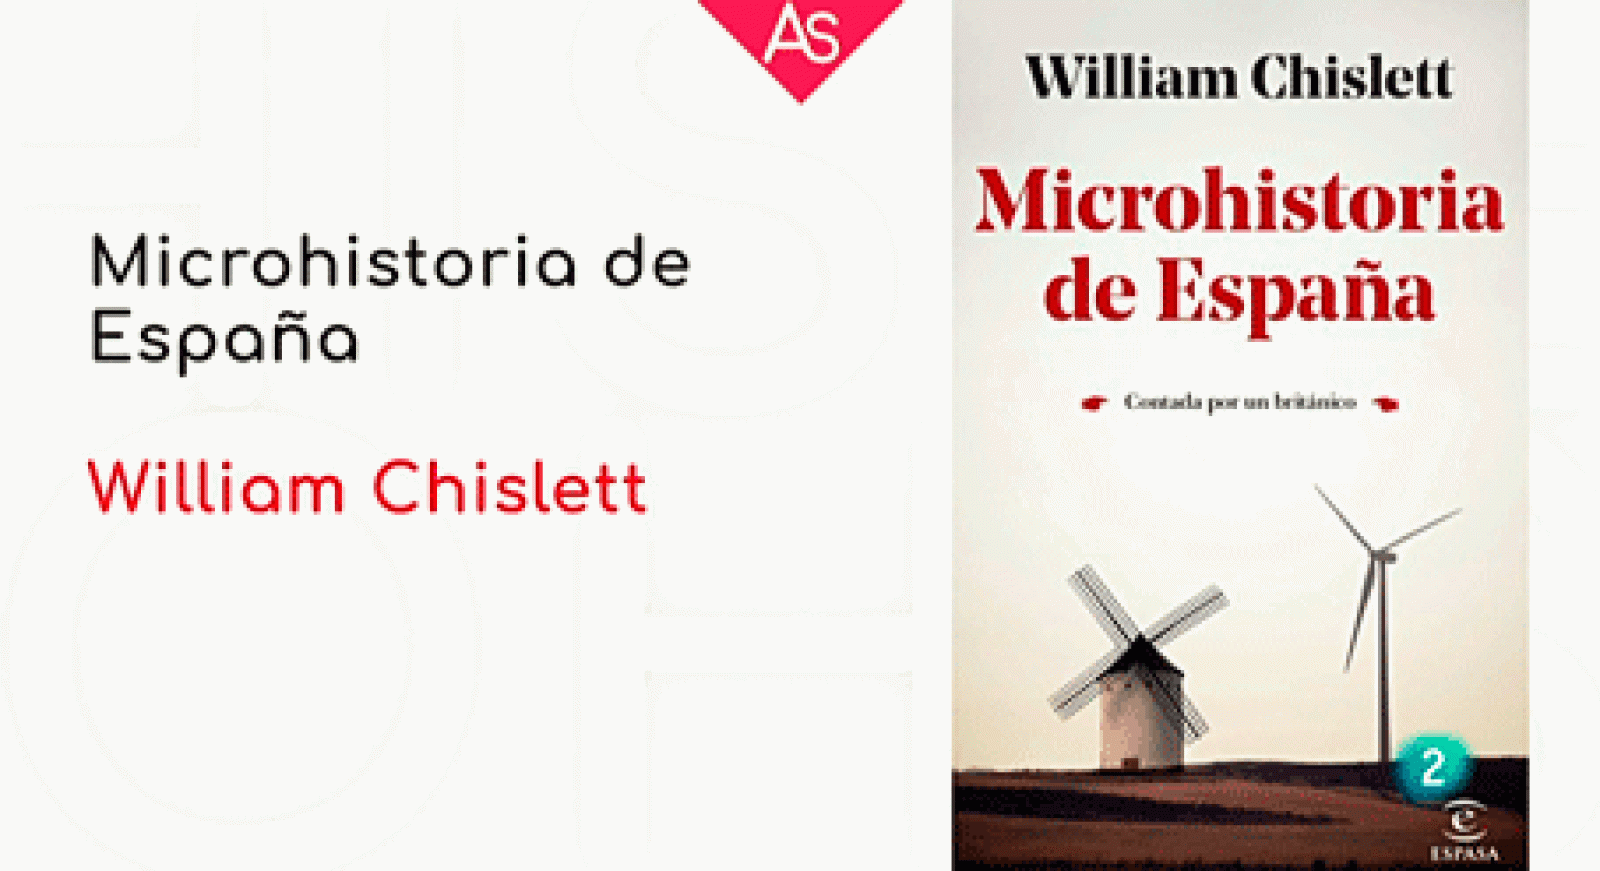 La aventura del saber - Microhistoria de España